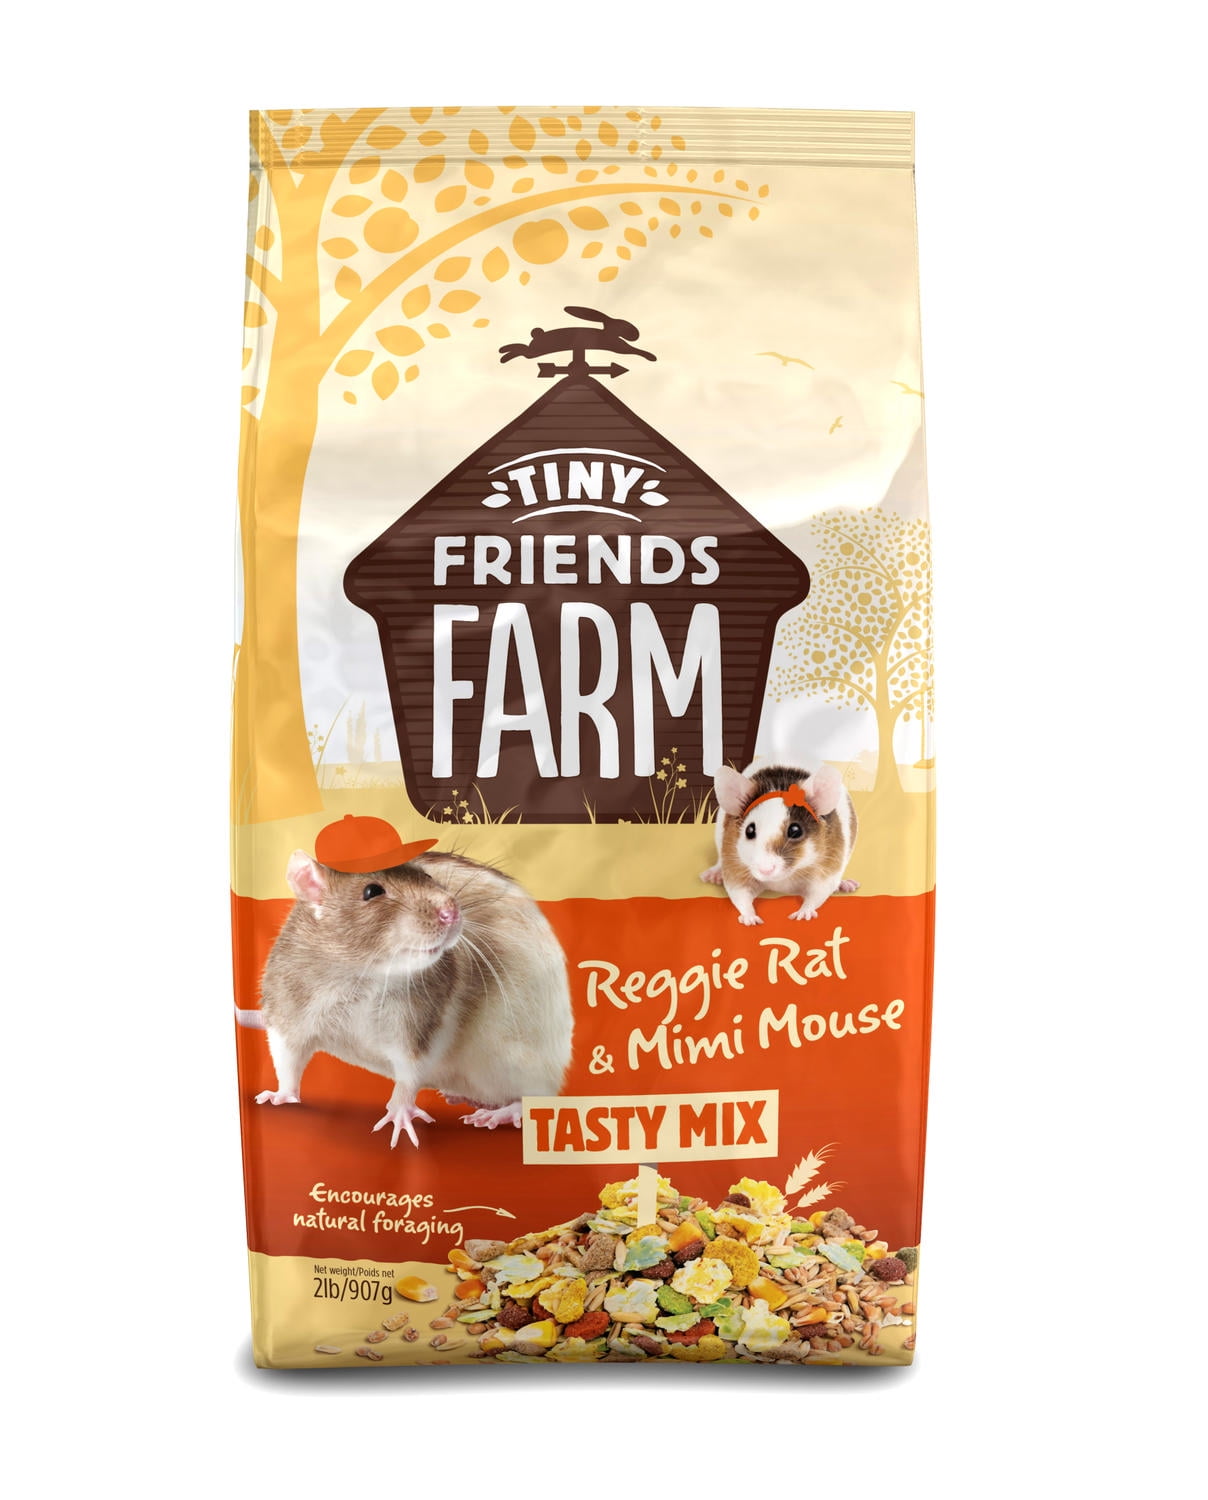 Picture of Supreme Pet Foods Limited SU21170 Tiny Friends Farm Reggie Rat & Mimi Mouse Food - 2 lbs